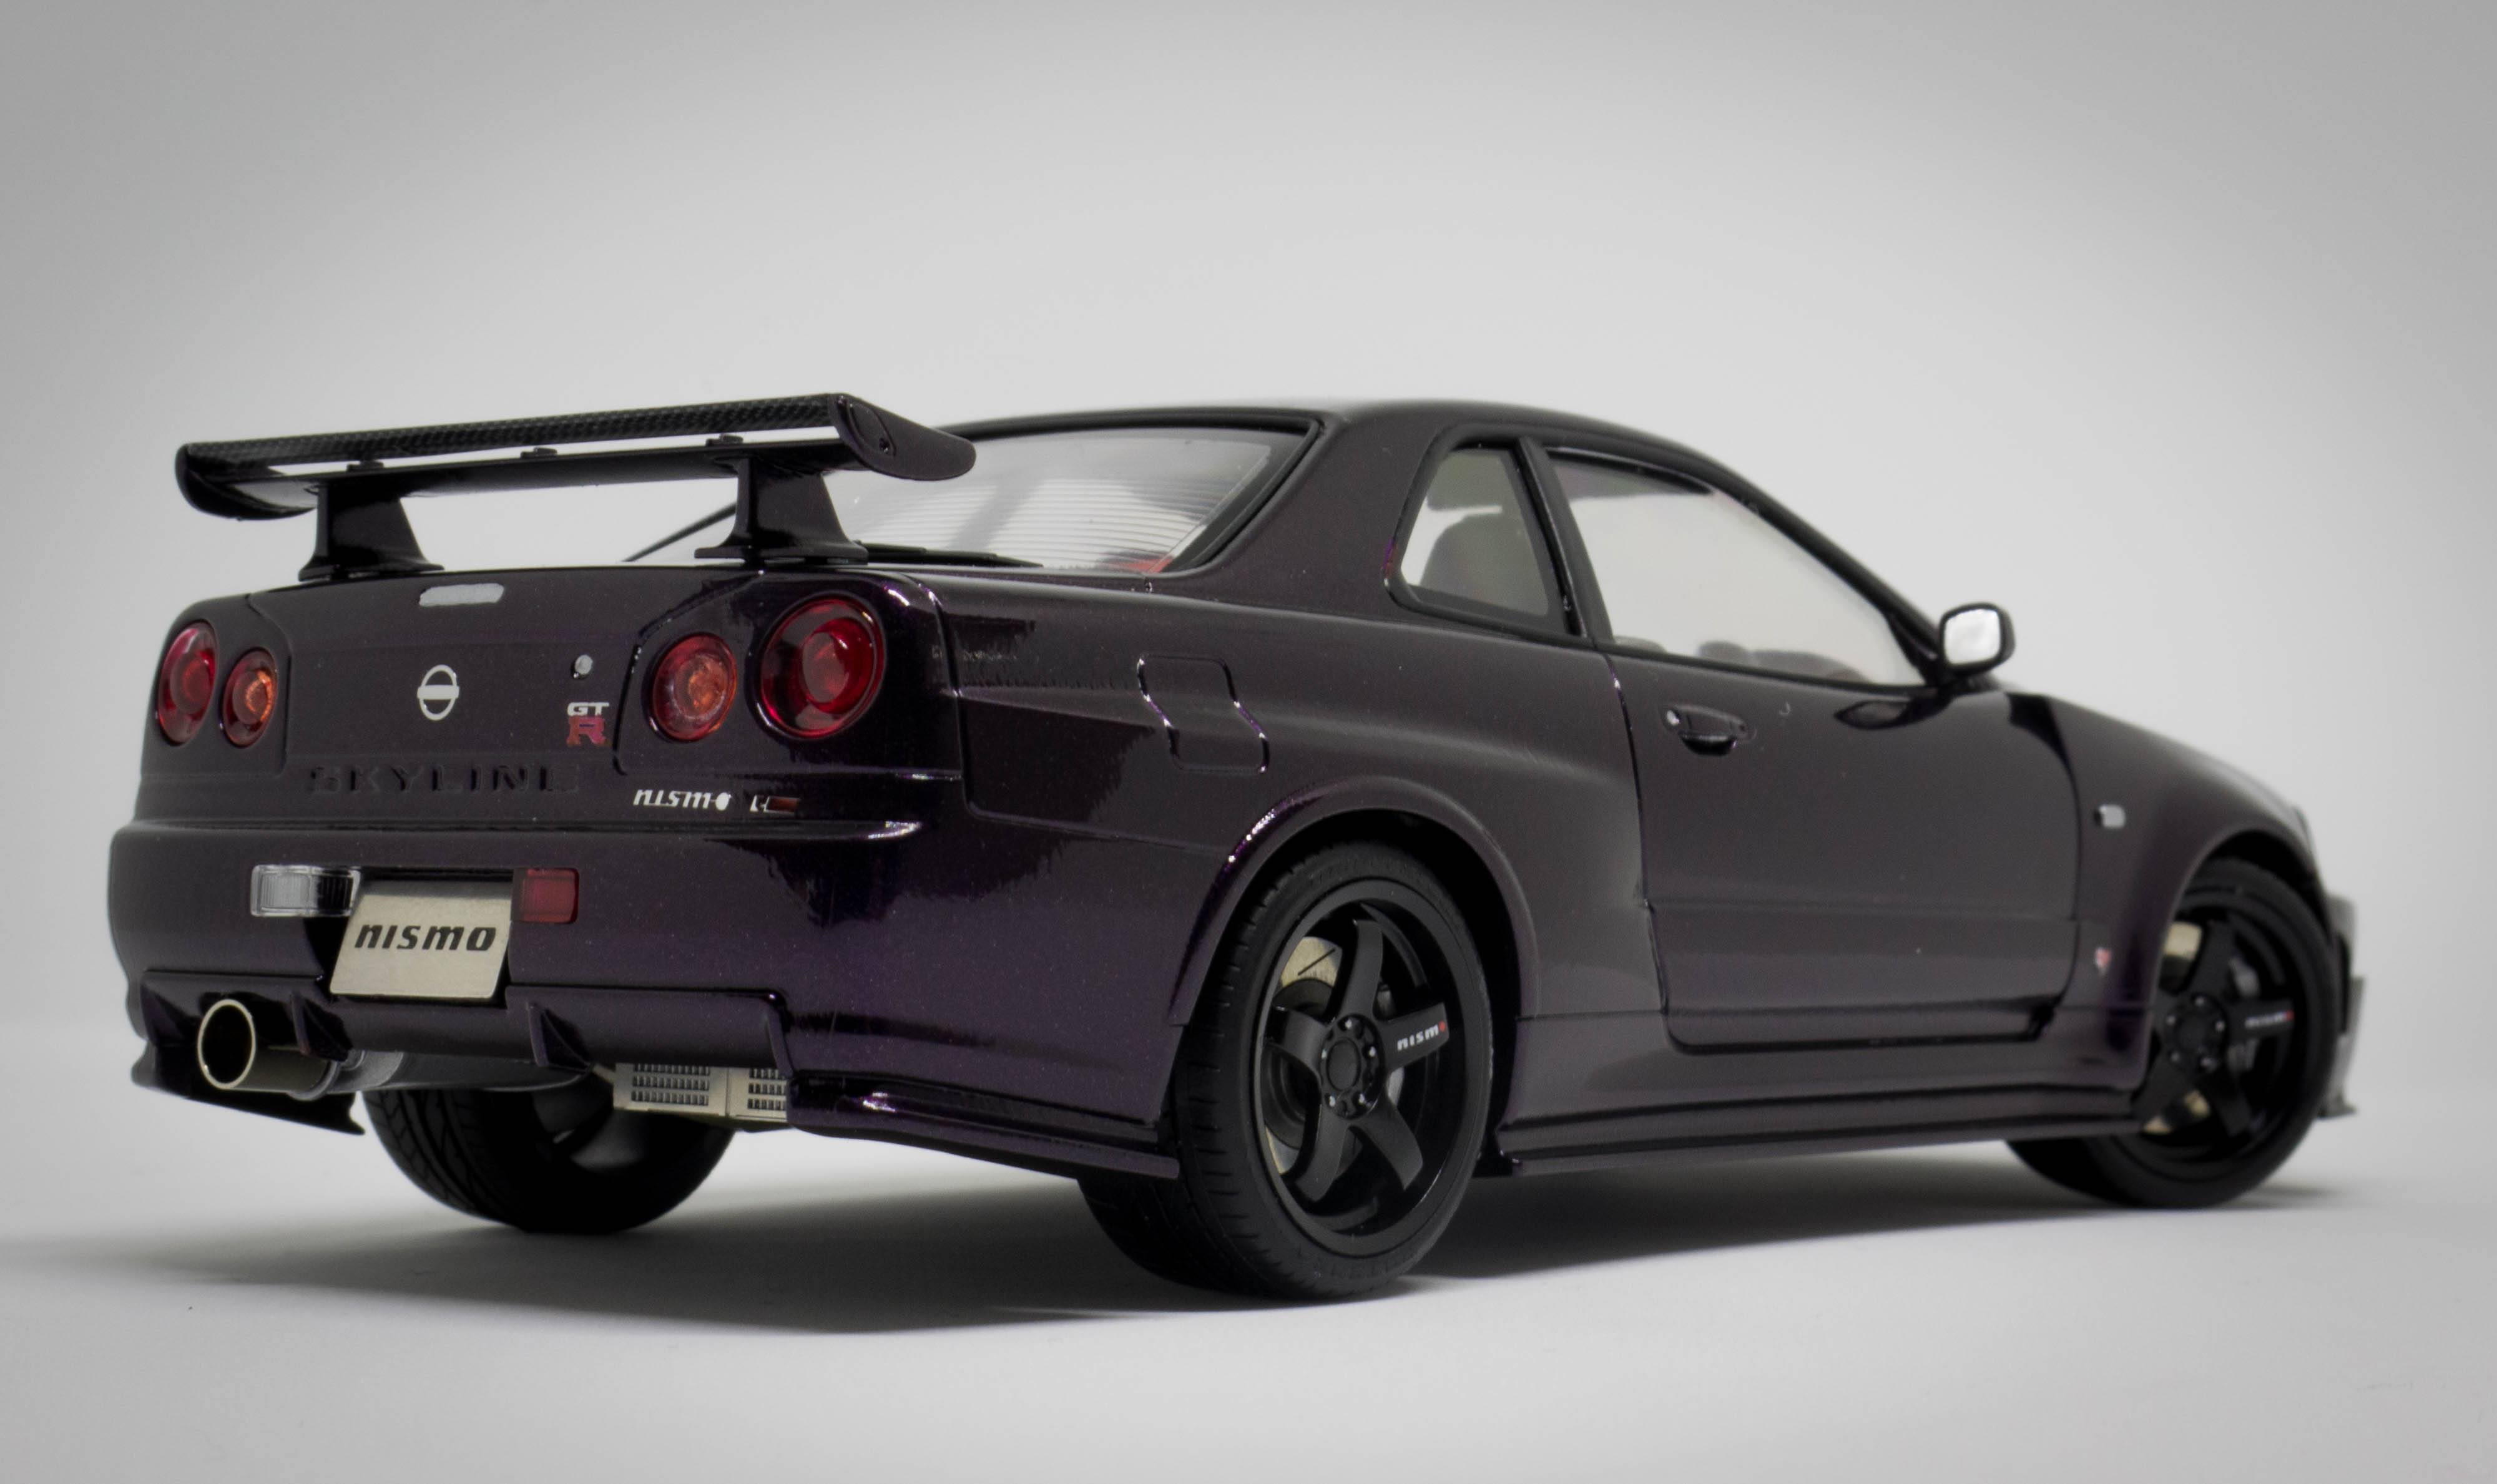 Nissan skyline GTR R34 Z-Tune - Model Cars - Model Cars Magazine Forum